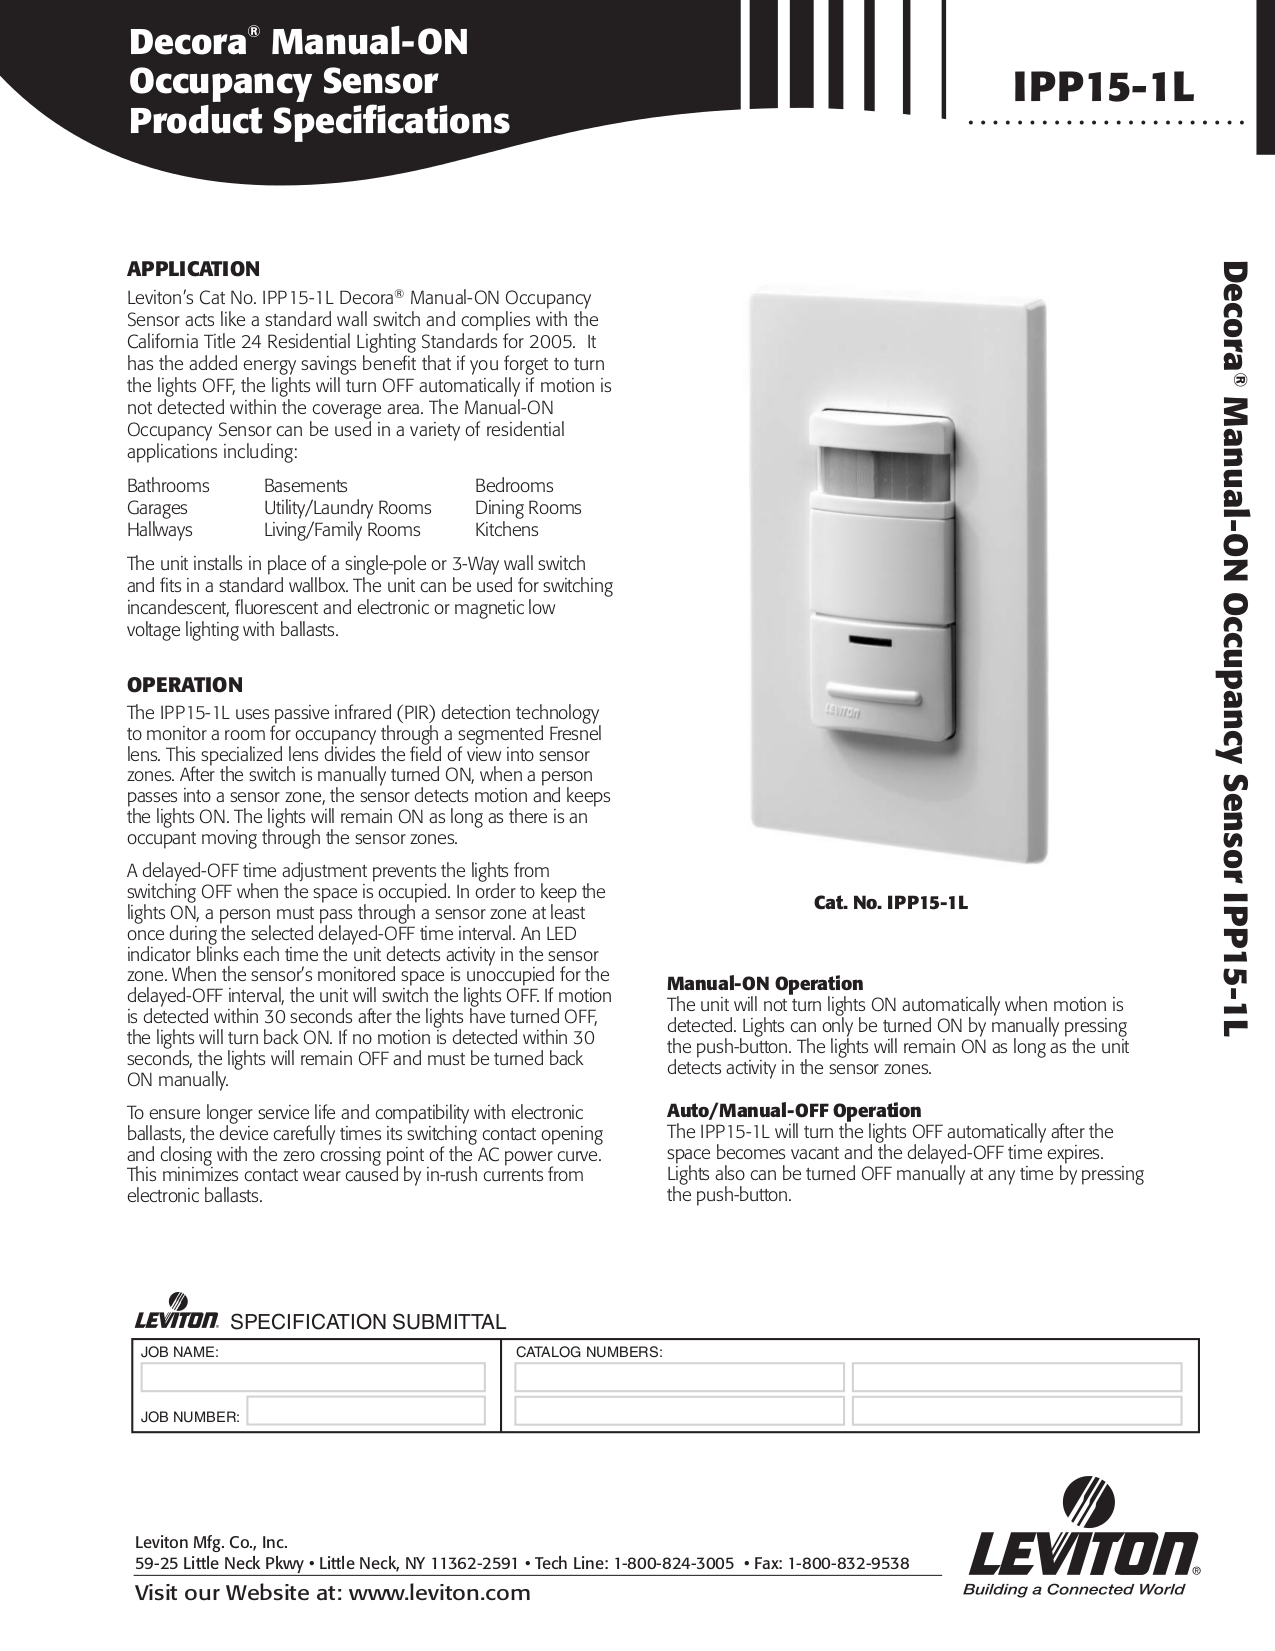 Download free pdf for Leviton IPP15-1L Occupancy Sensor ...